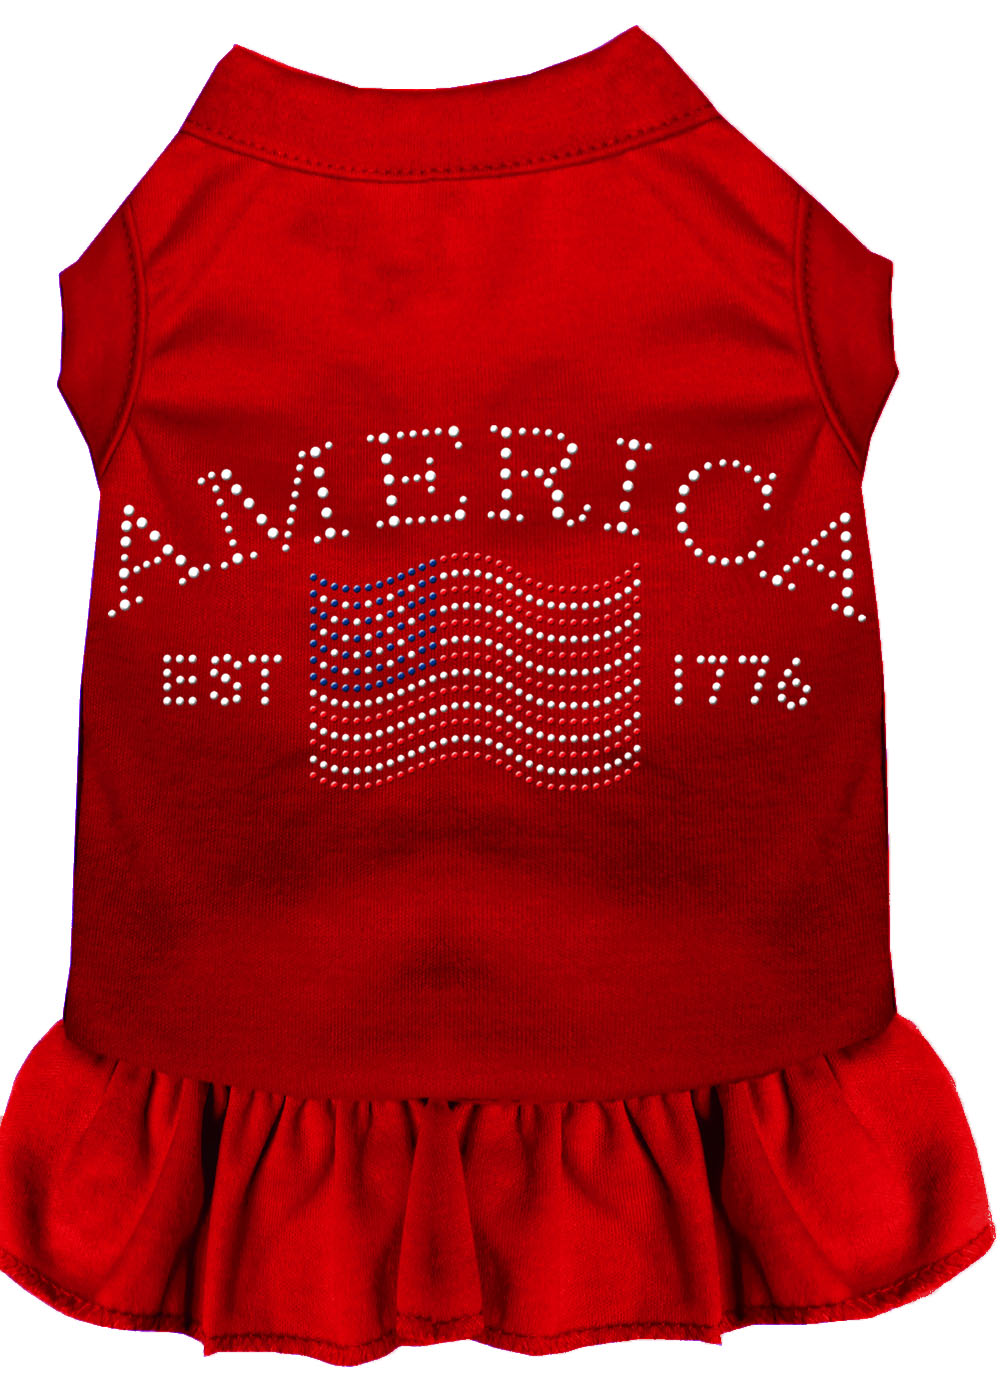 Classic America Rhinestone Dress Red 4X